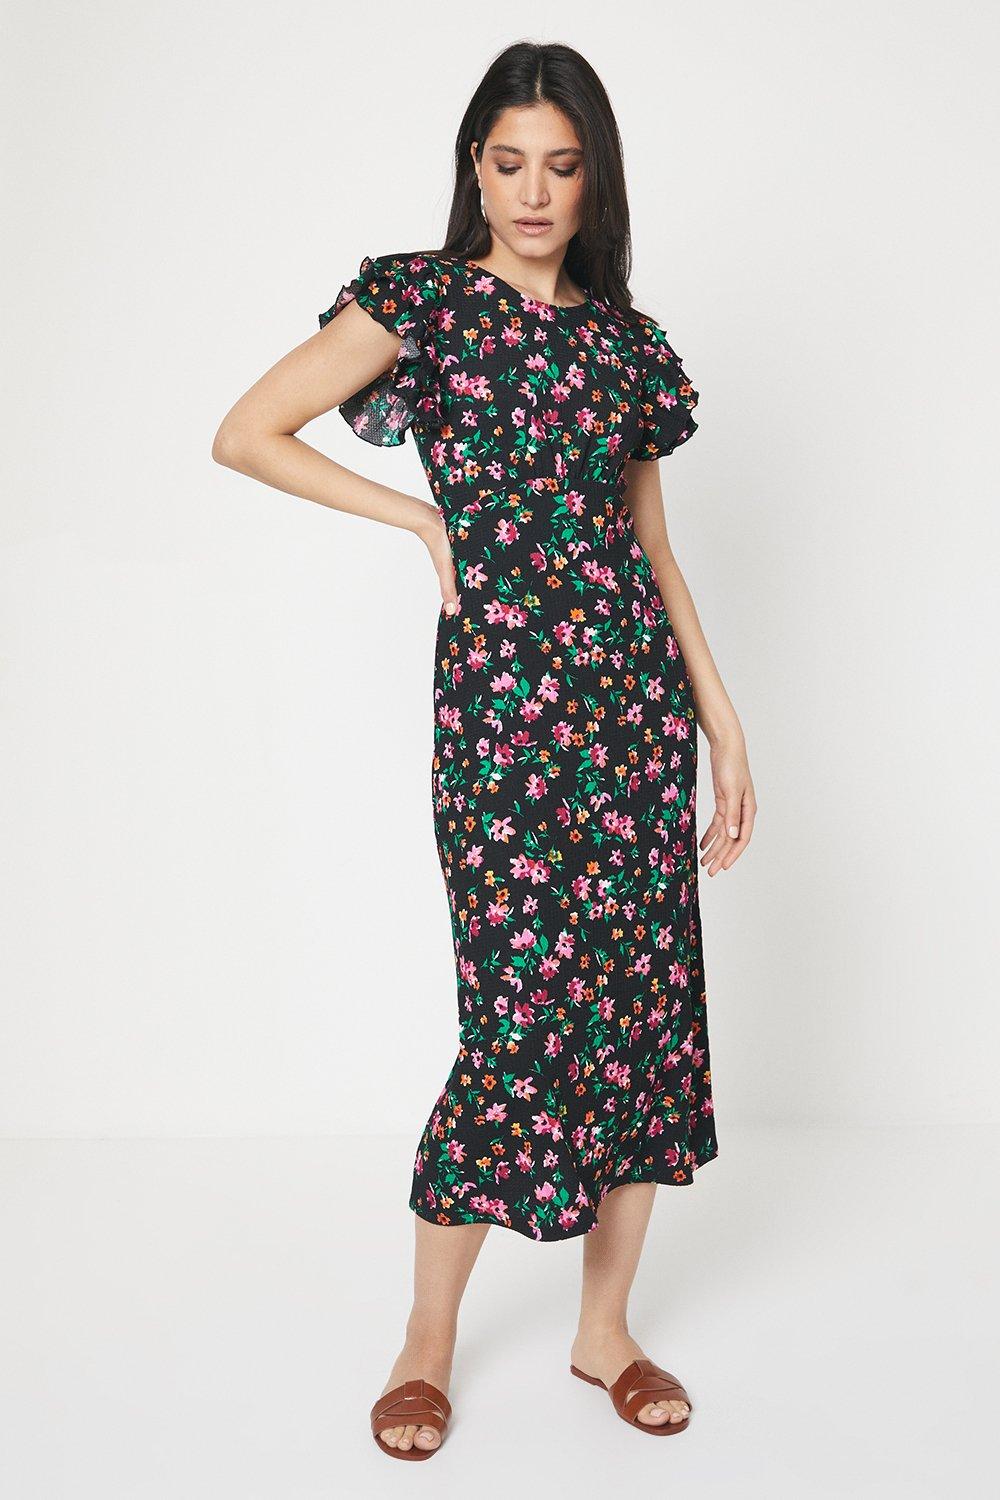 Women's Black Floral Print Ruffle Sleeve Empire Midi Dress - 8